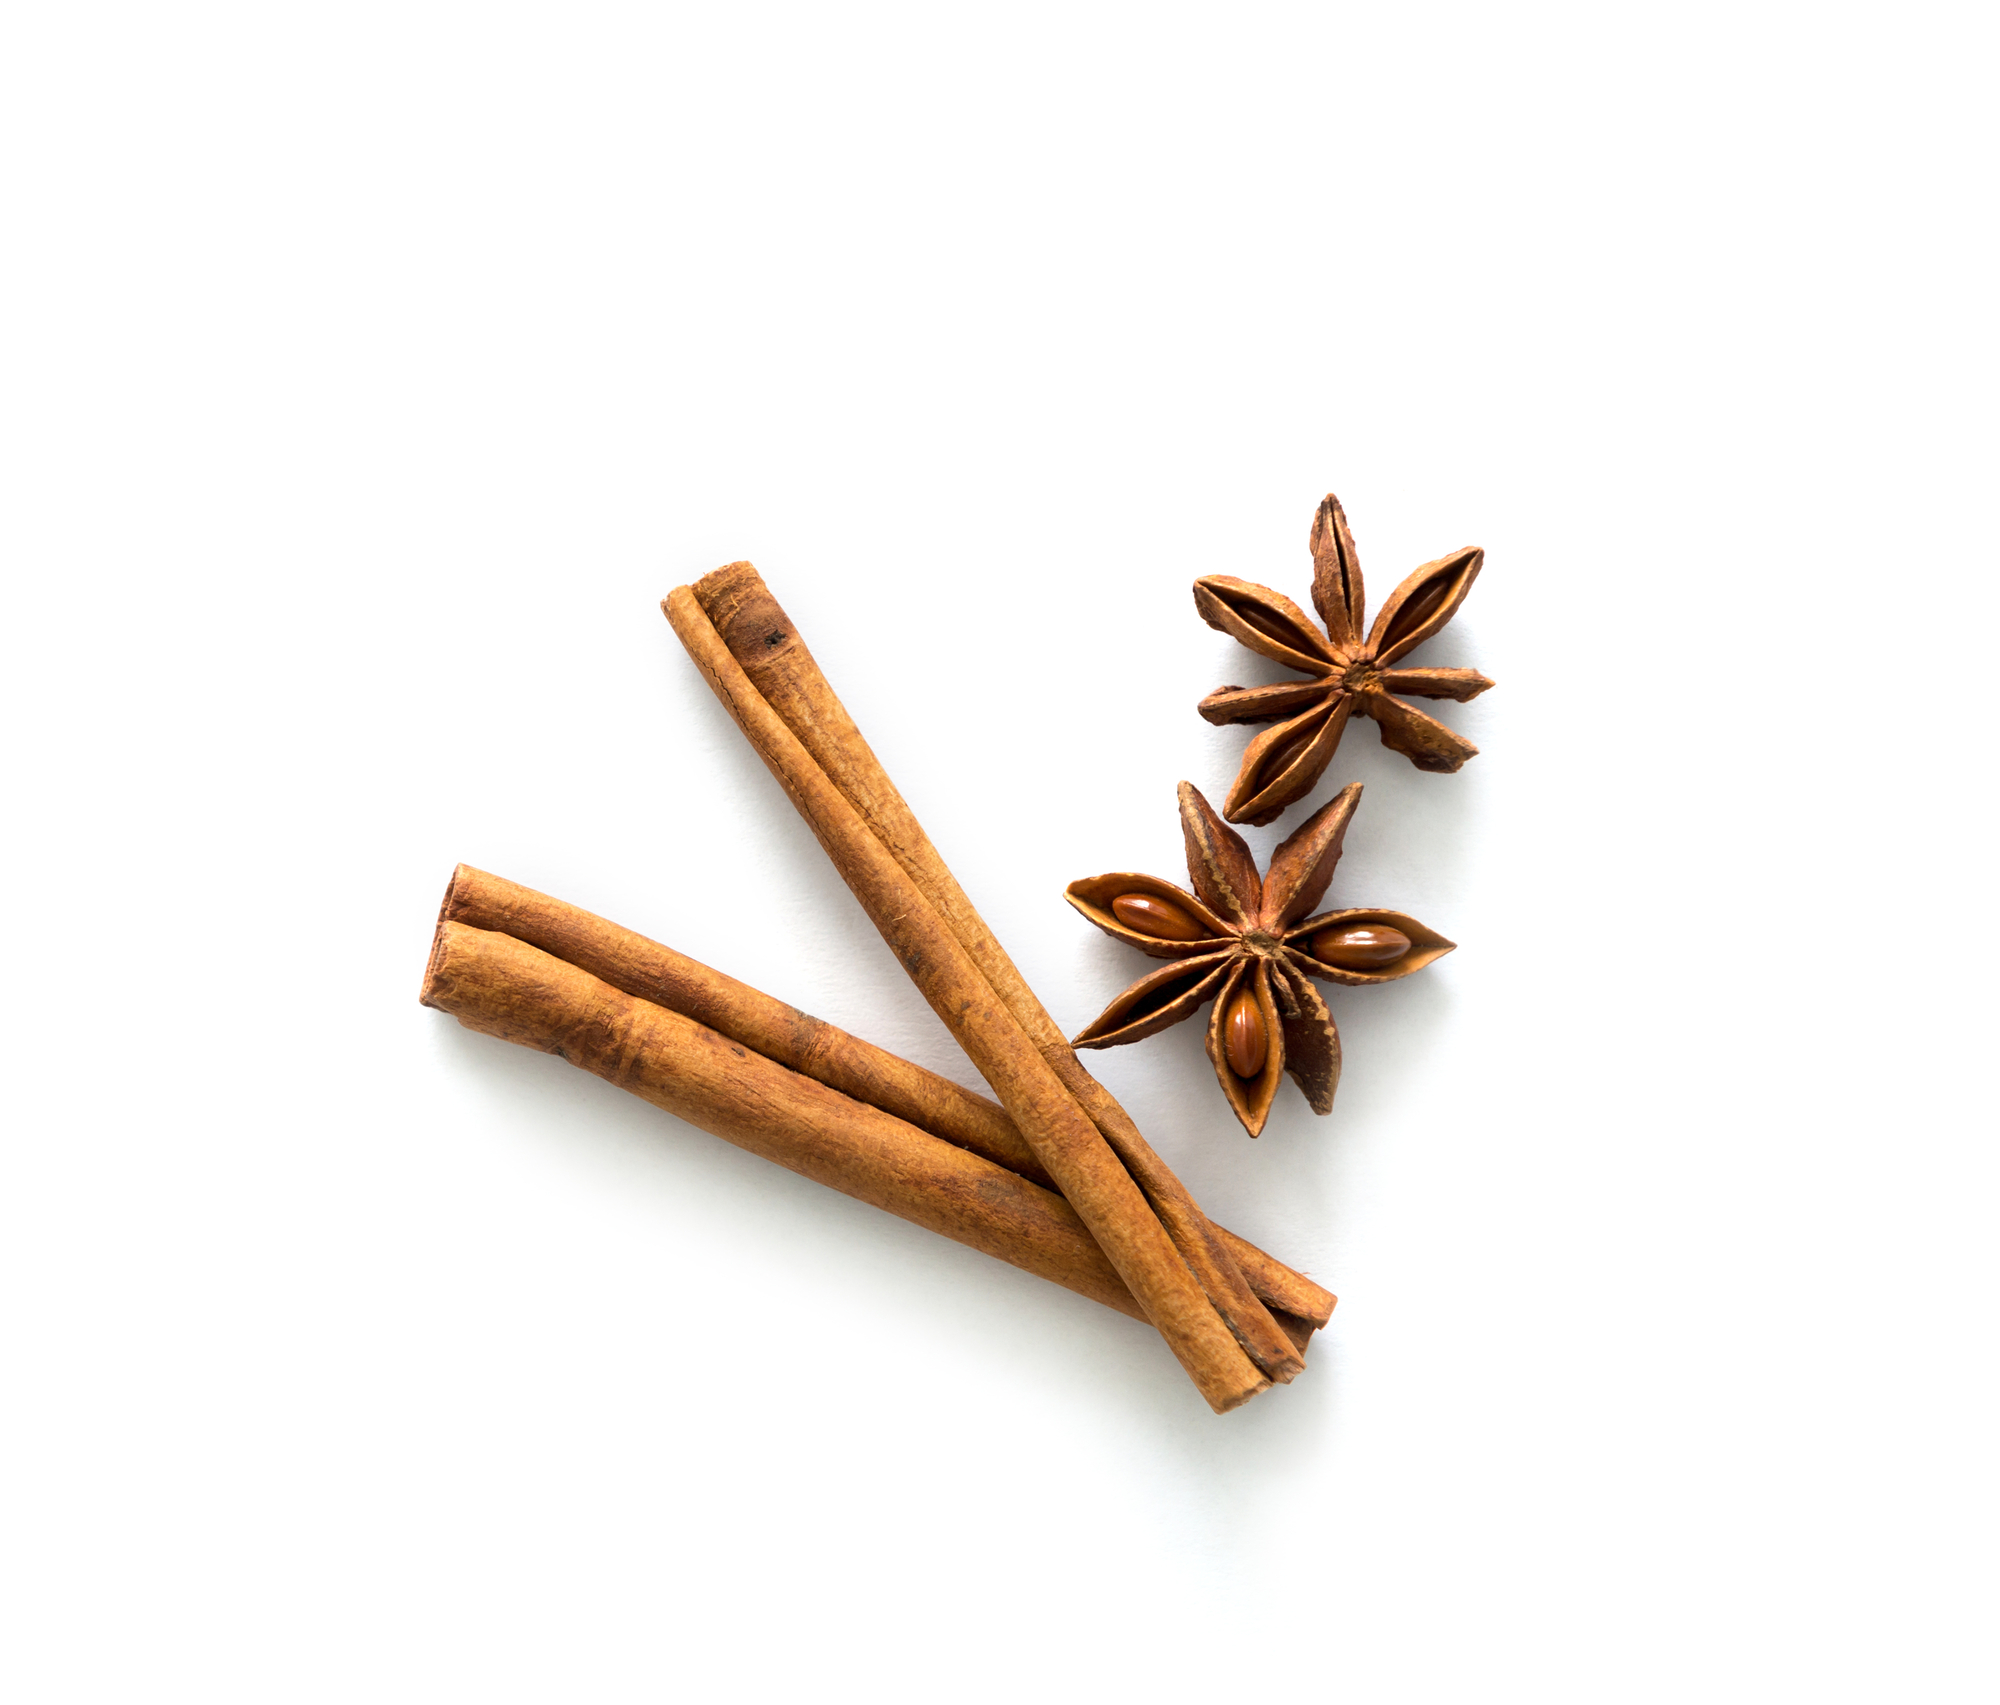 Two cinnamon sticks lying on table